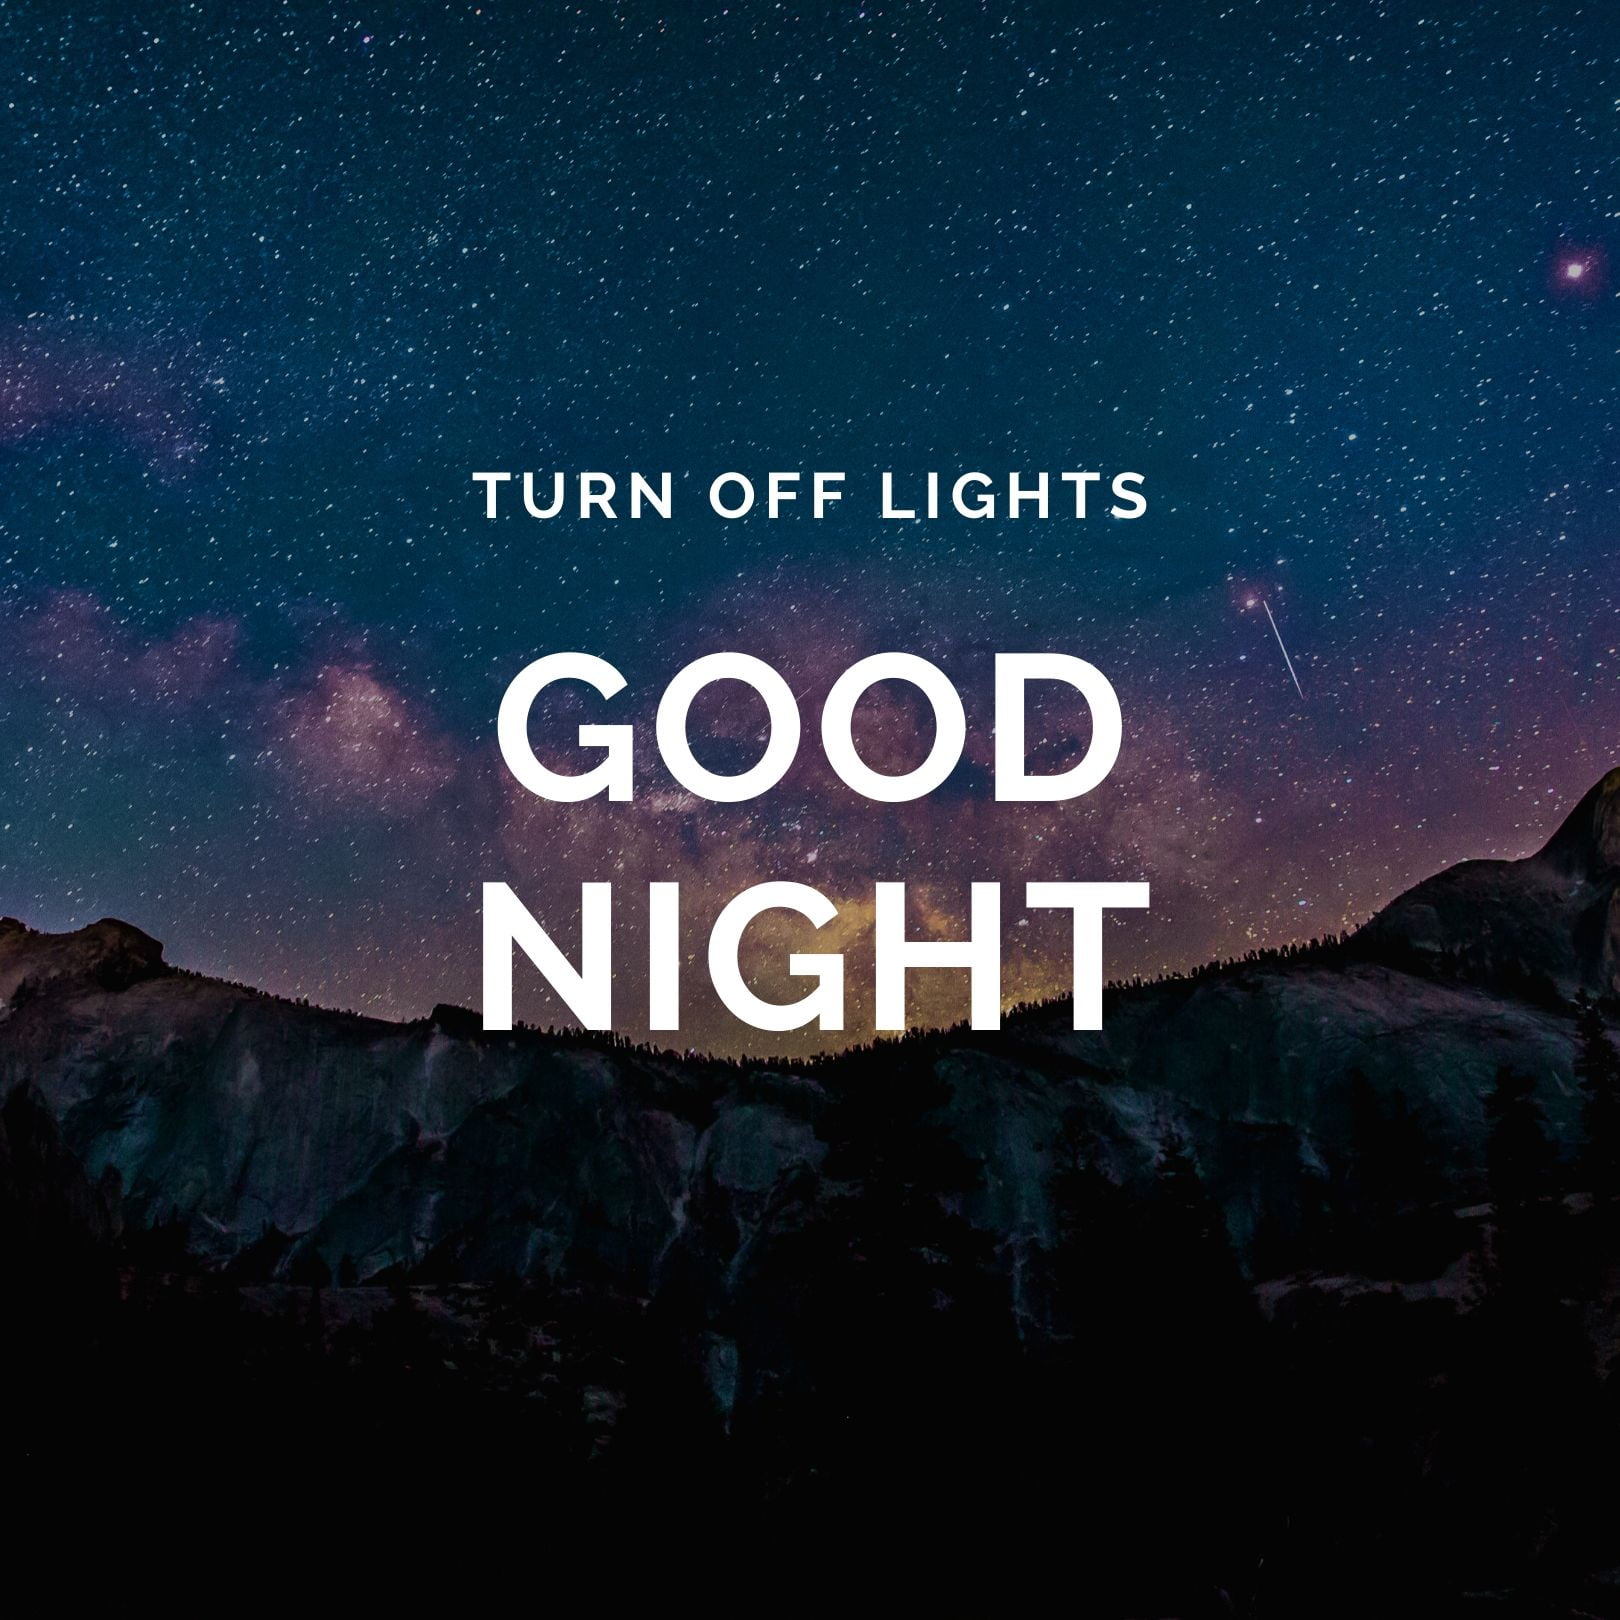 Good Night Turn off Lights Image